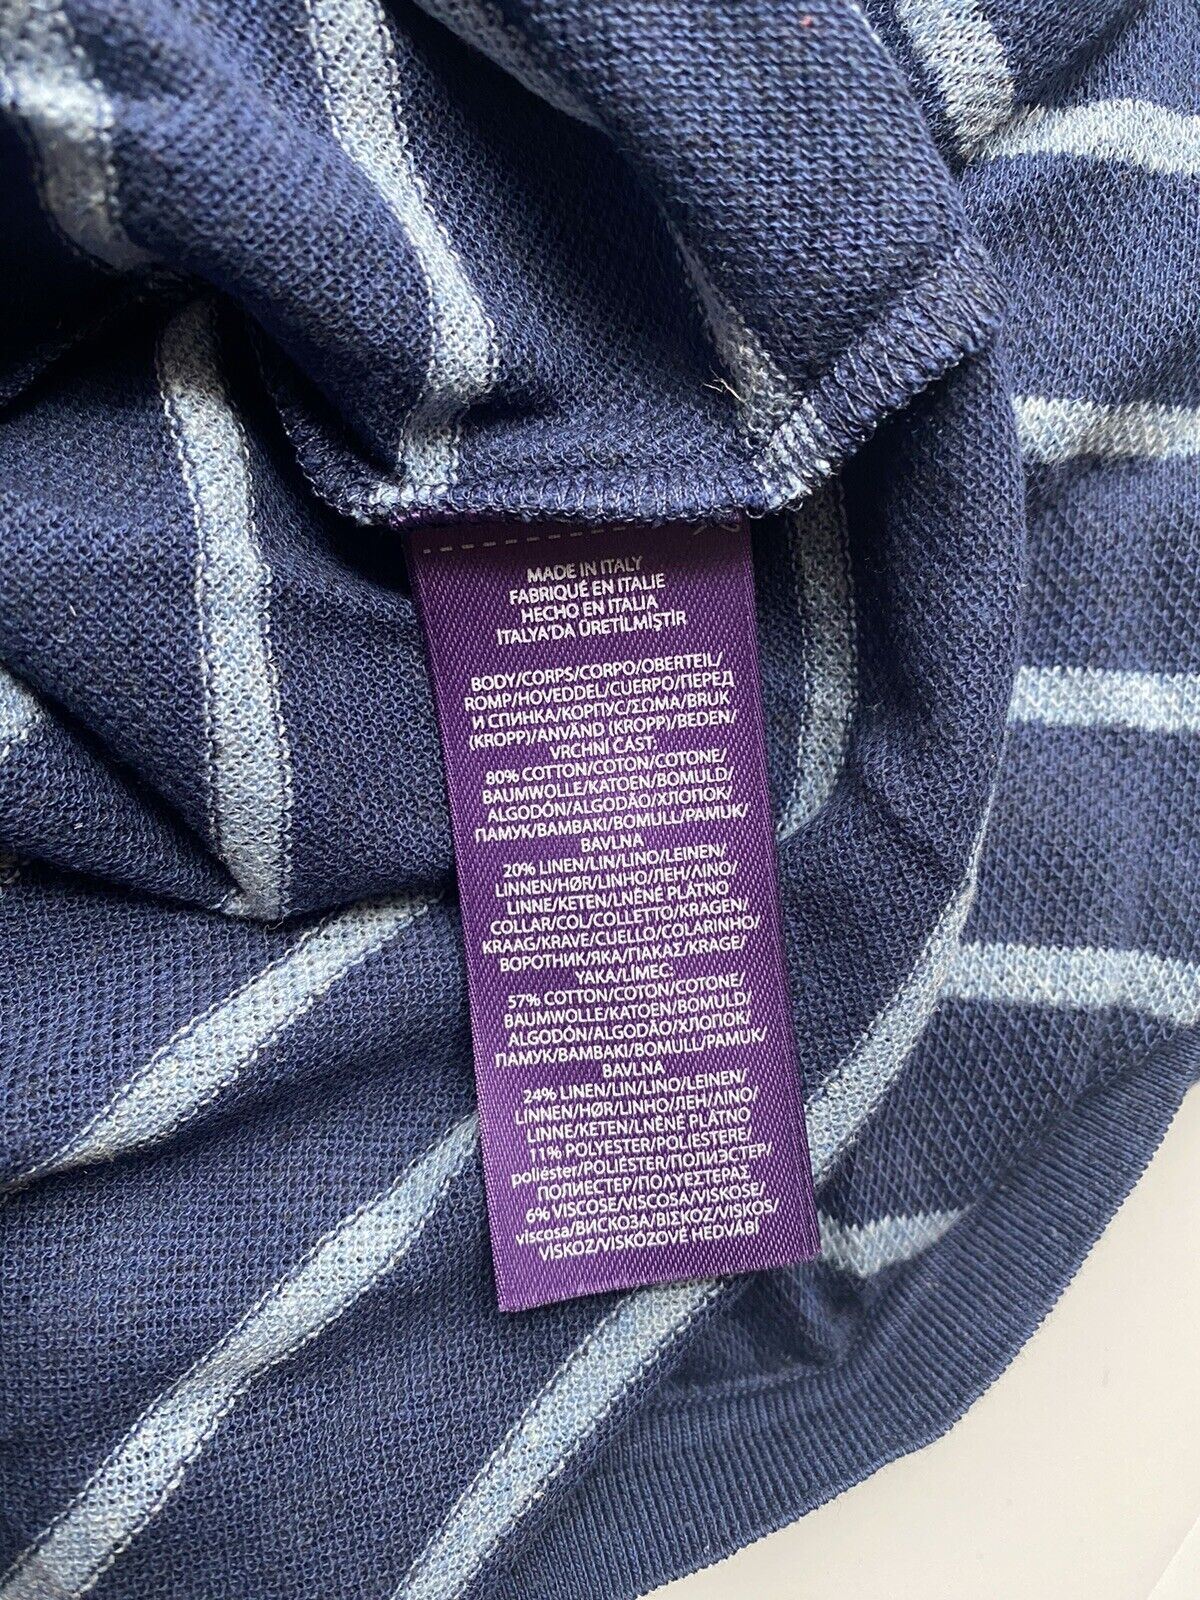 NWT $395 Ralph Lauren Purple Label Custom Slim Fit Cotton-Linen Polo Shirt 2XL